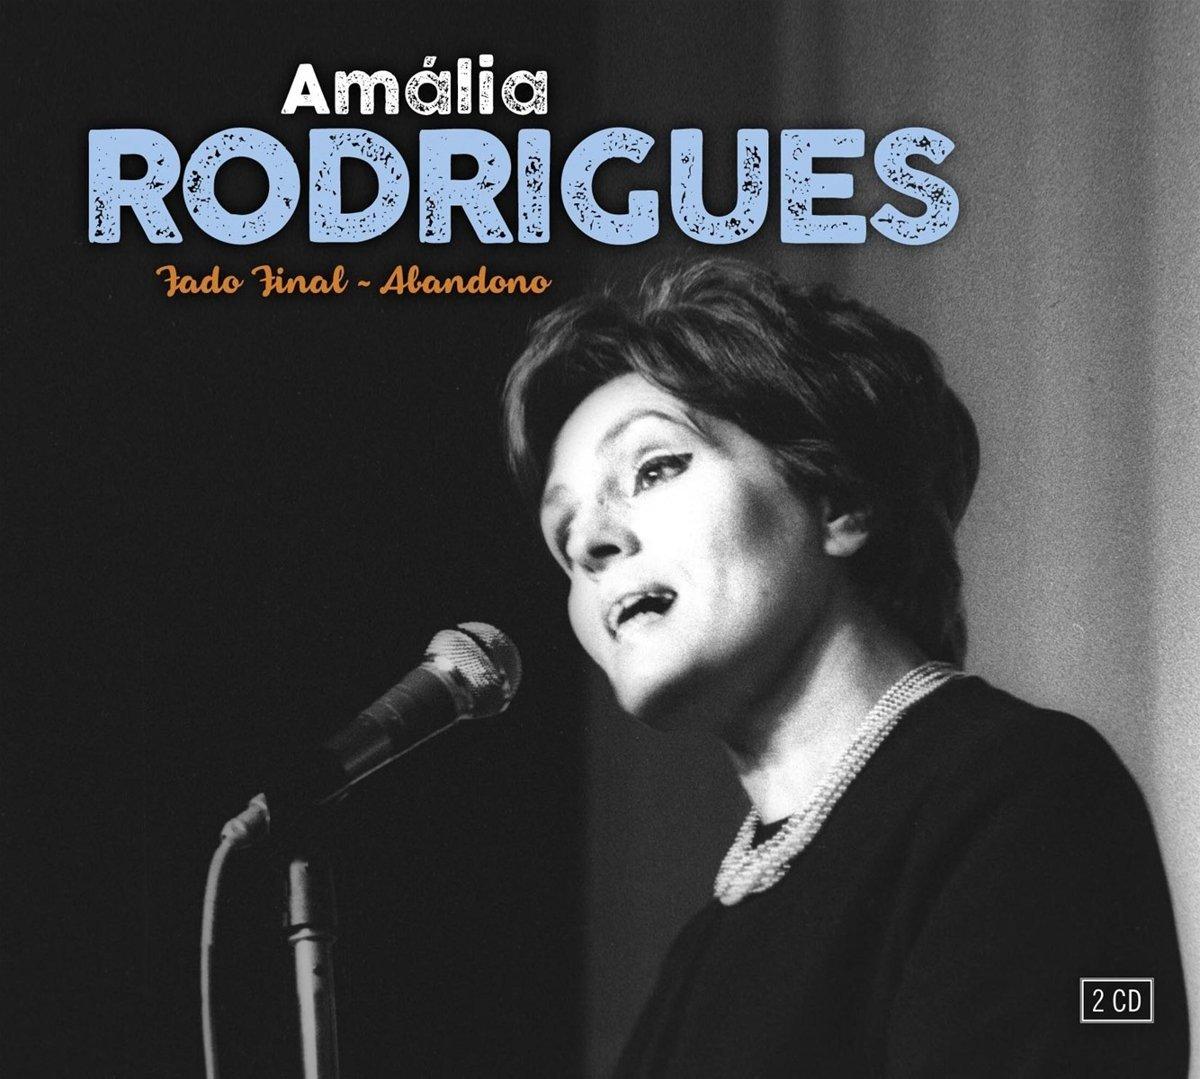 Rodrigues, Amália - Fado Final - Abandono DELUXE EDT.